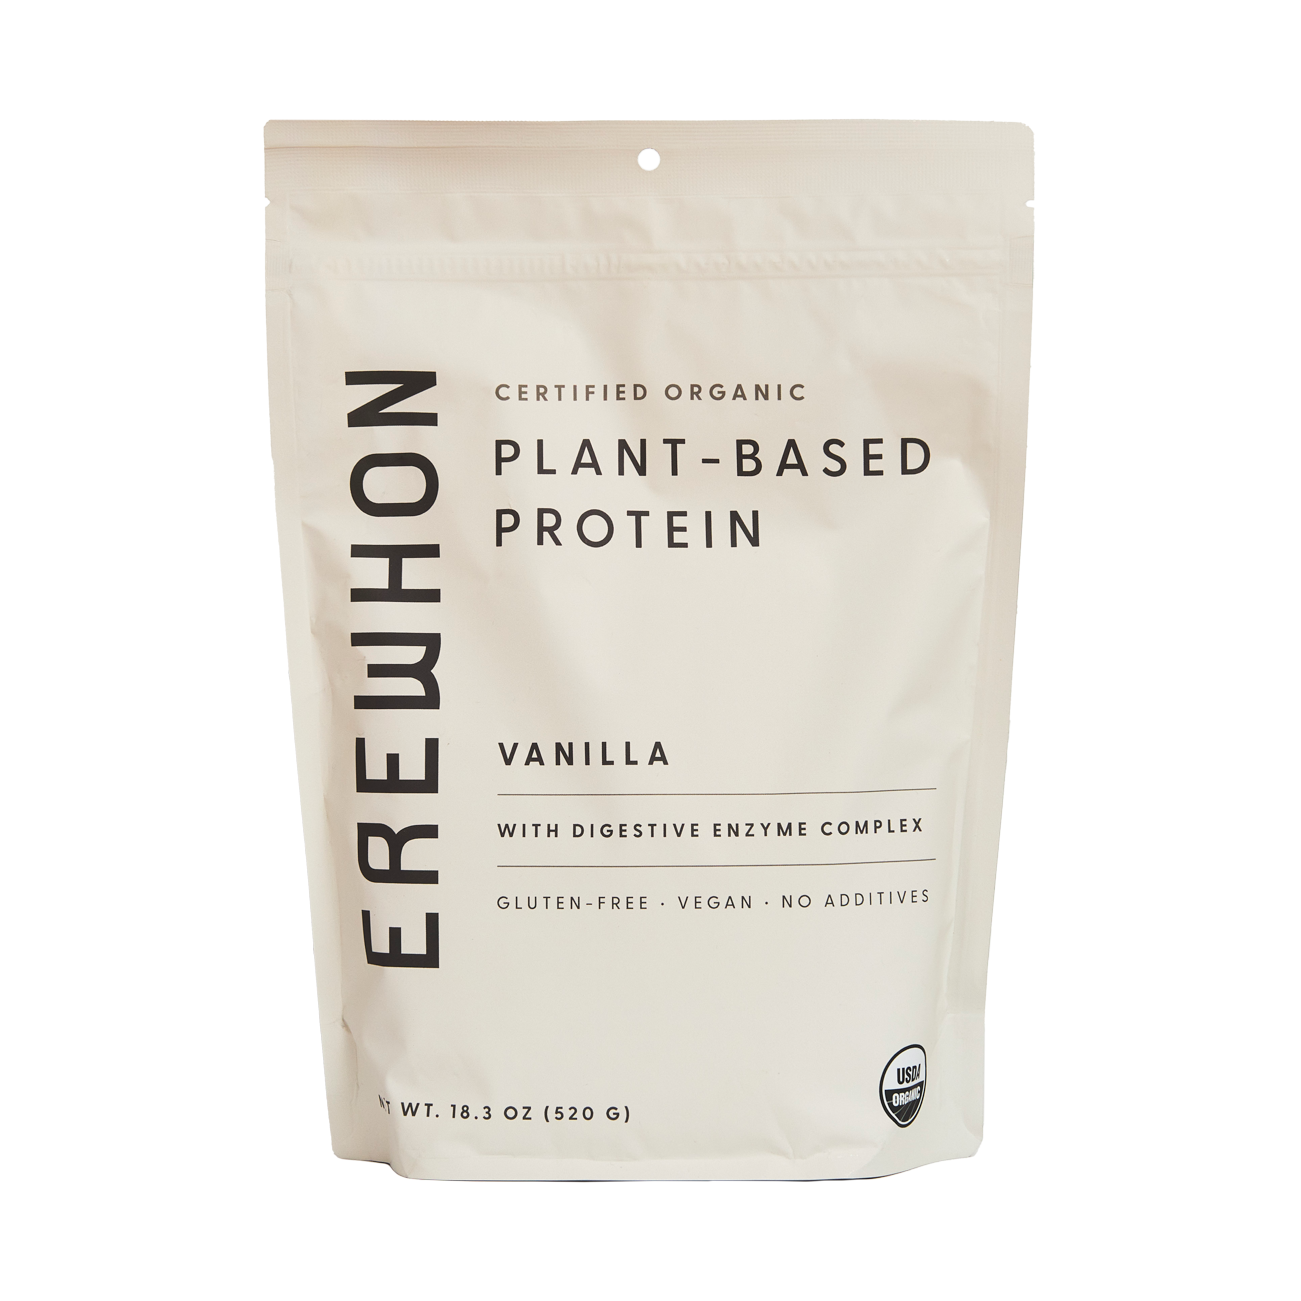 Vanilla Plant-Based Protein Erewhon